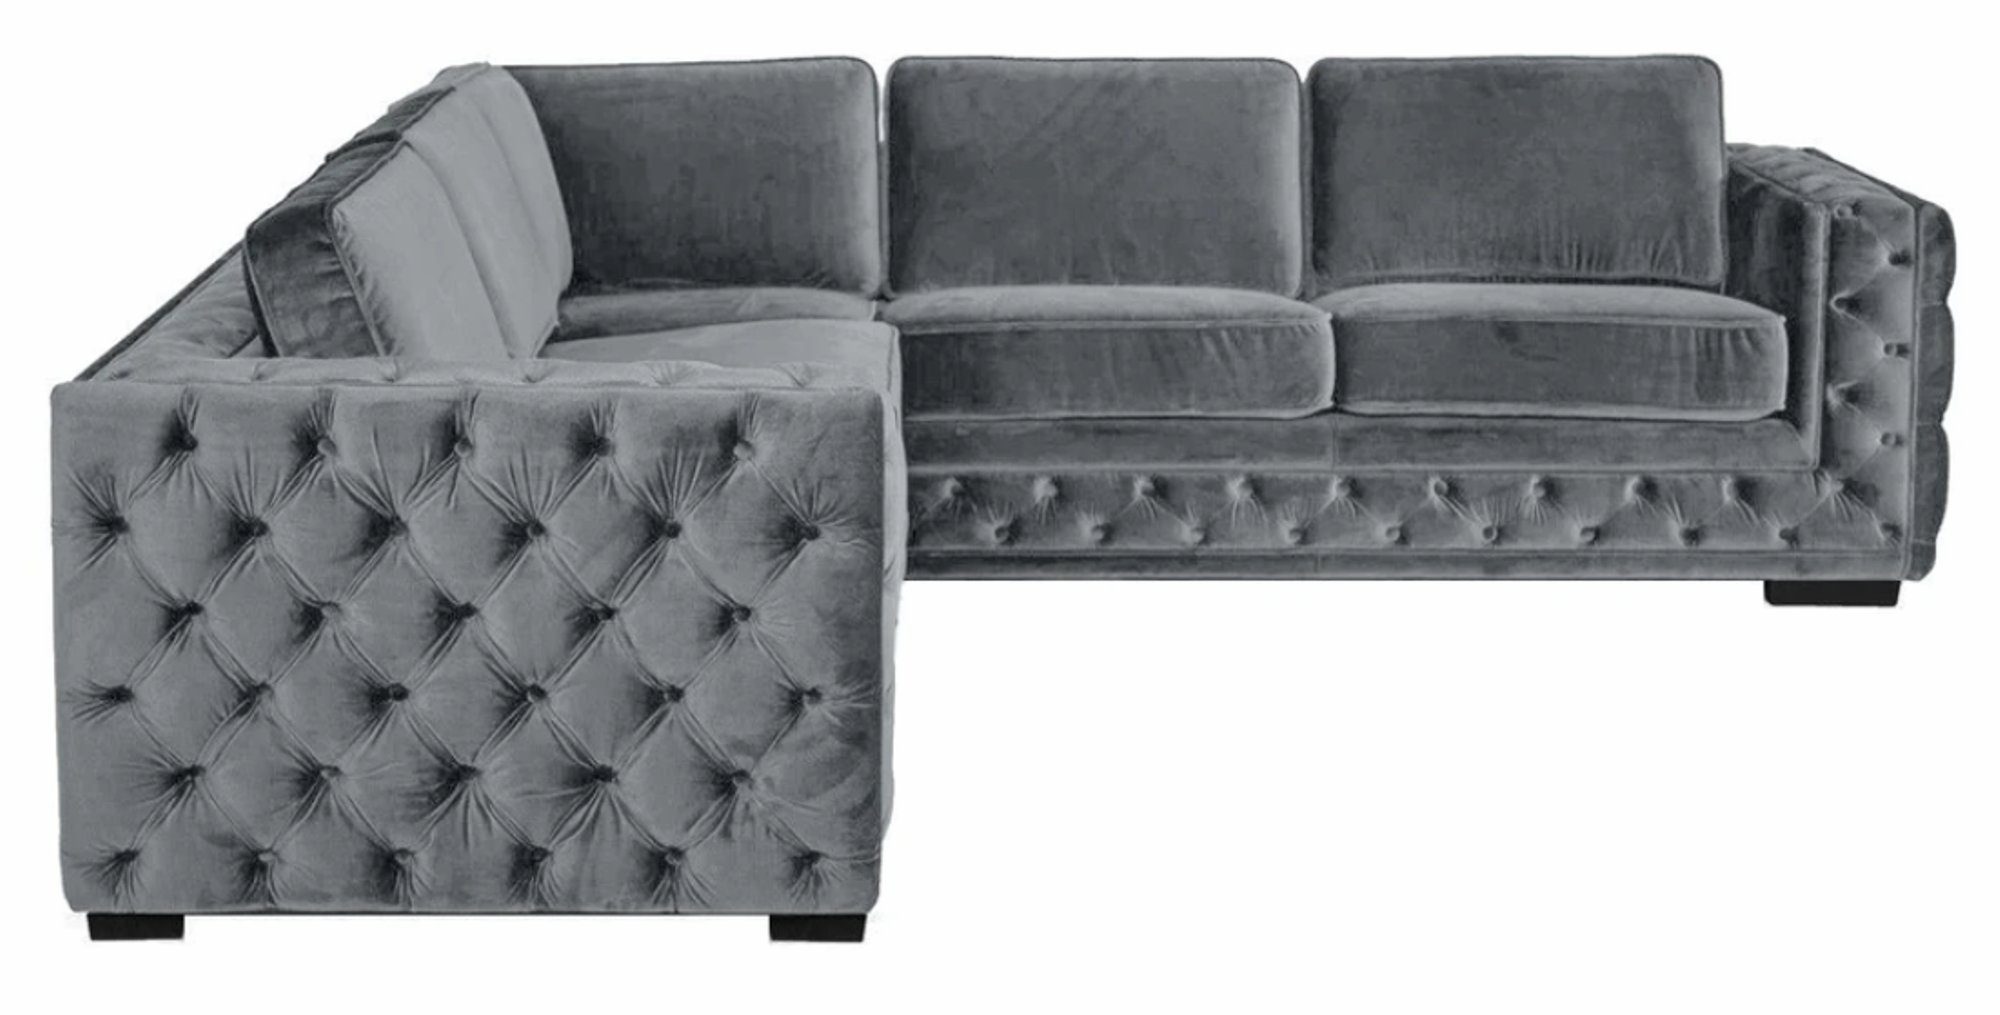 JVmoebel Ecksofa Ecksofa Grau Ecken Samt Möbel Design Wohnlandschaft Couch, Made in Europe